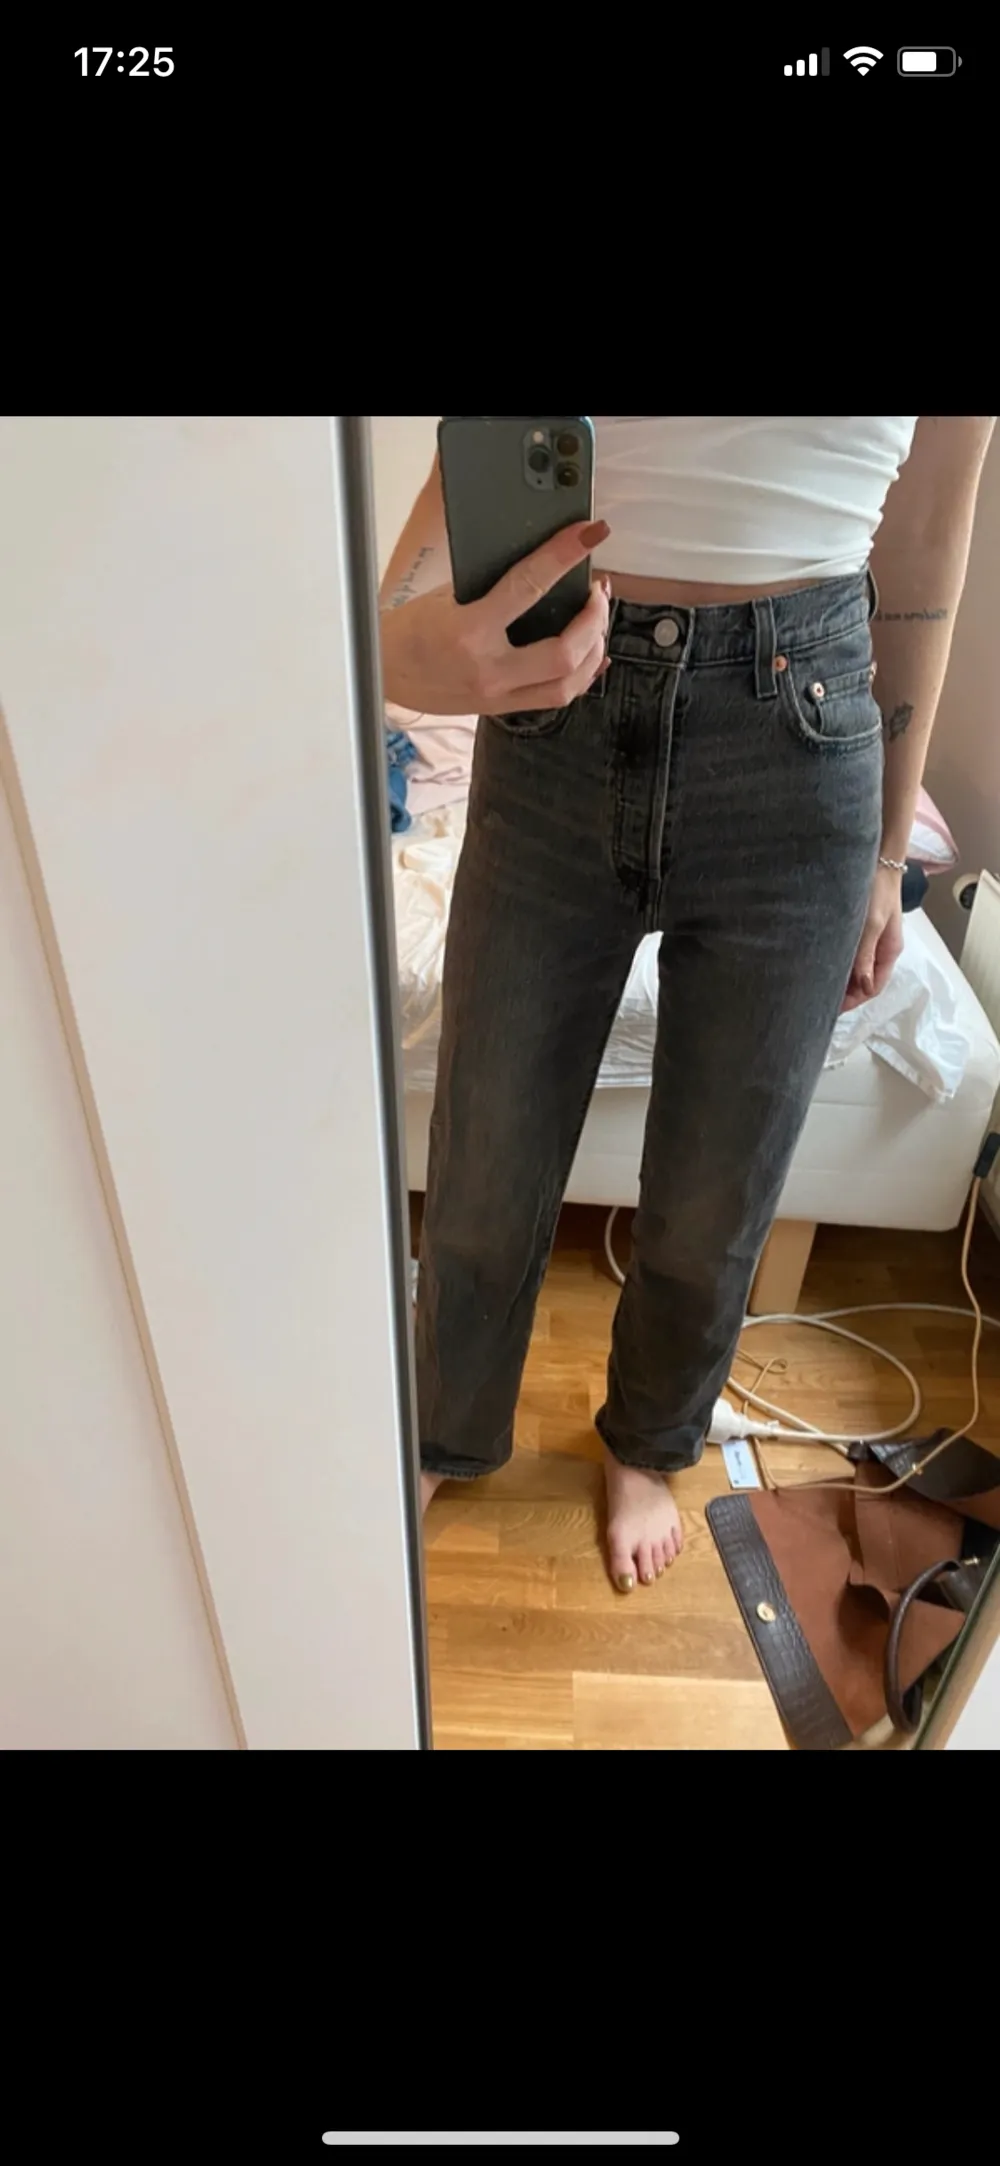 Gråa Levi’s jeans . Storlek 24 men passar även 25. Jeans & Byxor.